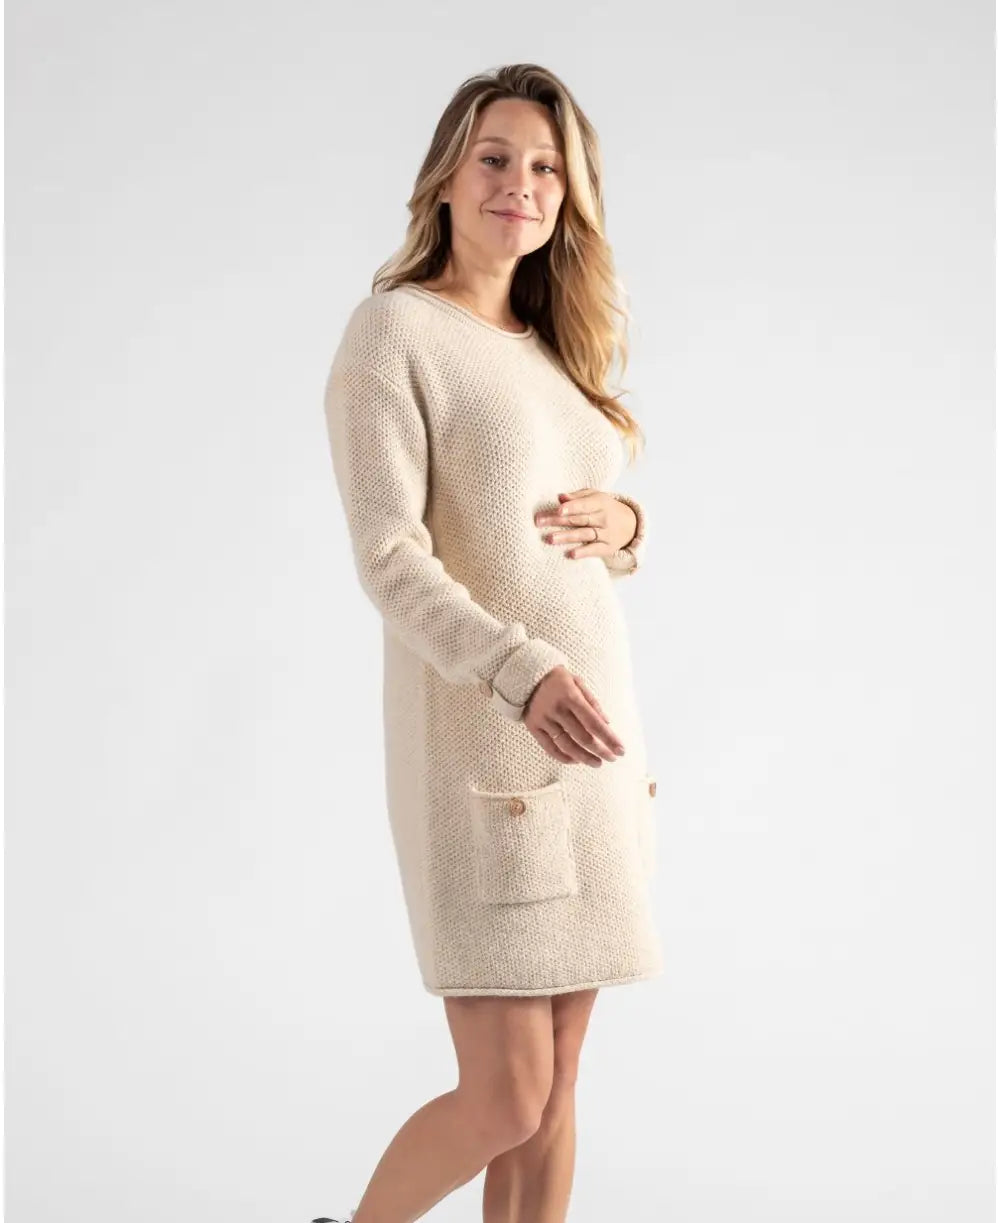 Pregnancy and nursing dress Honey beige - Robes